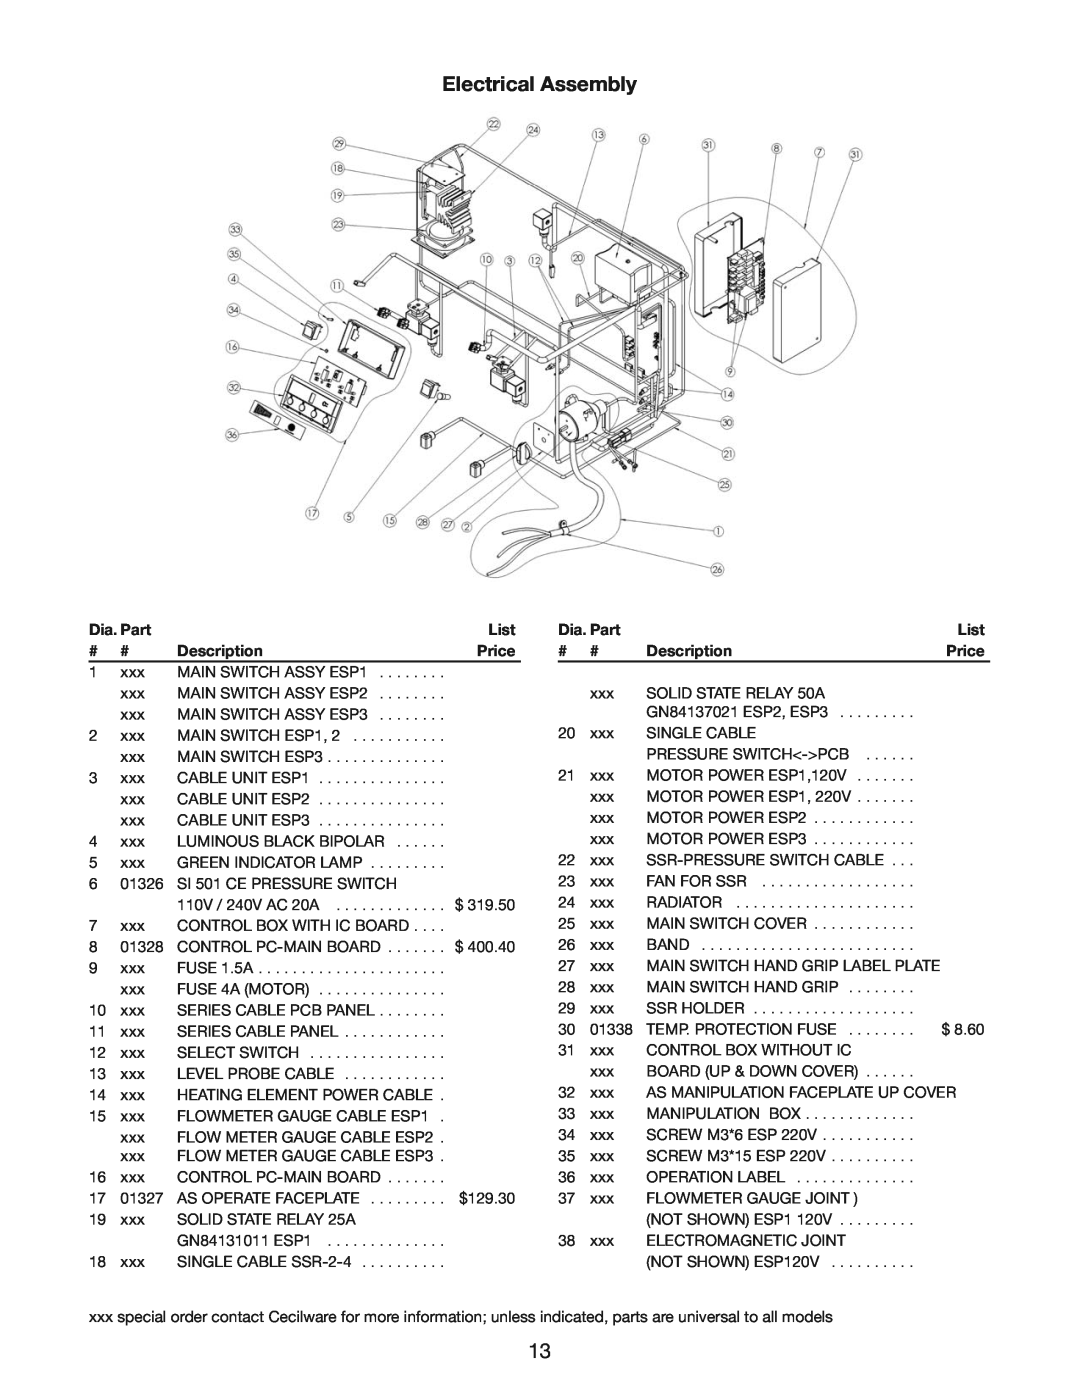 Cecilware ESP1, ESP3, ESP2 instruction manual Electrical Assembly, Dia. Part, List, Description 